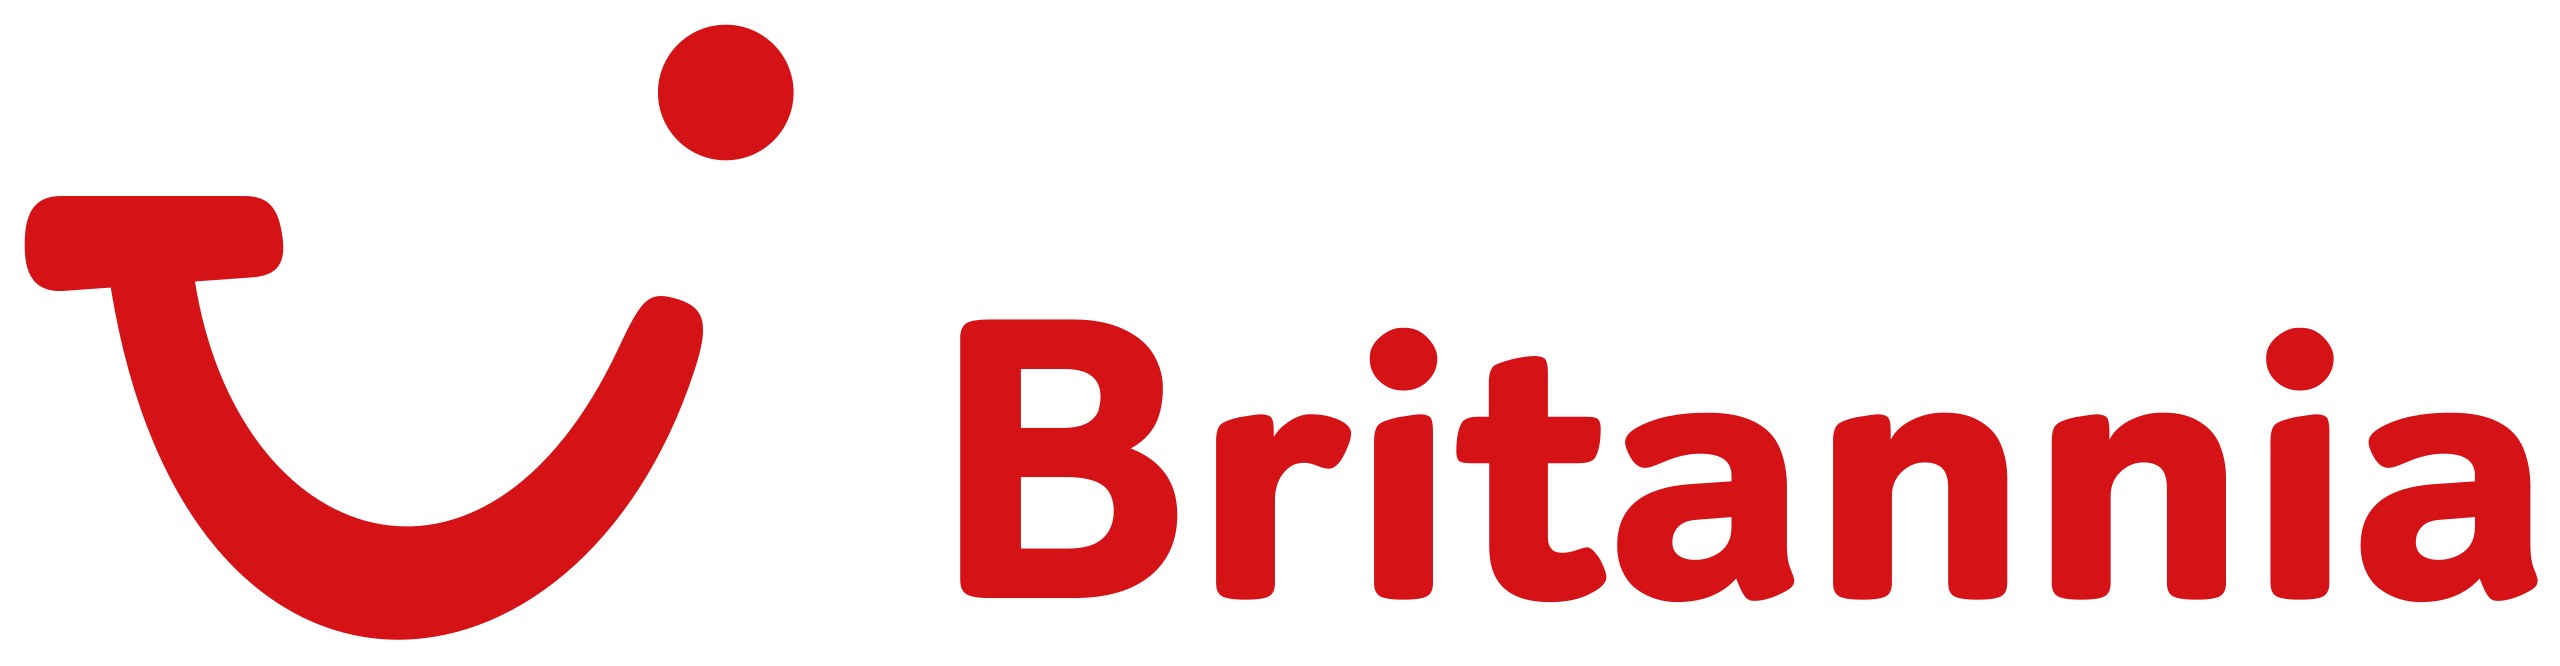 Britannia Logo - Picture of The Britannia, Southend-on-Sea - Tripadvisor-cheohanoi.vn